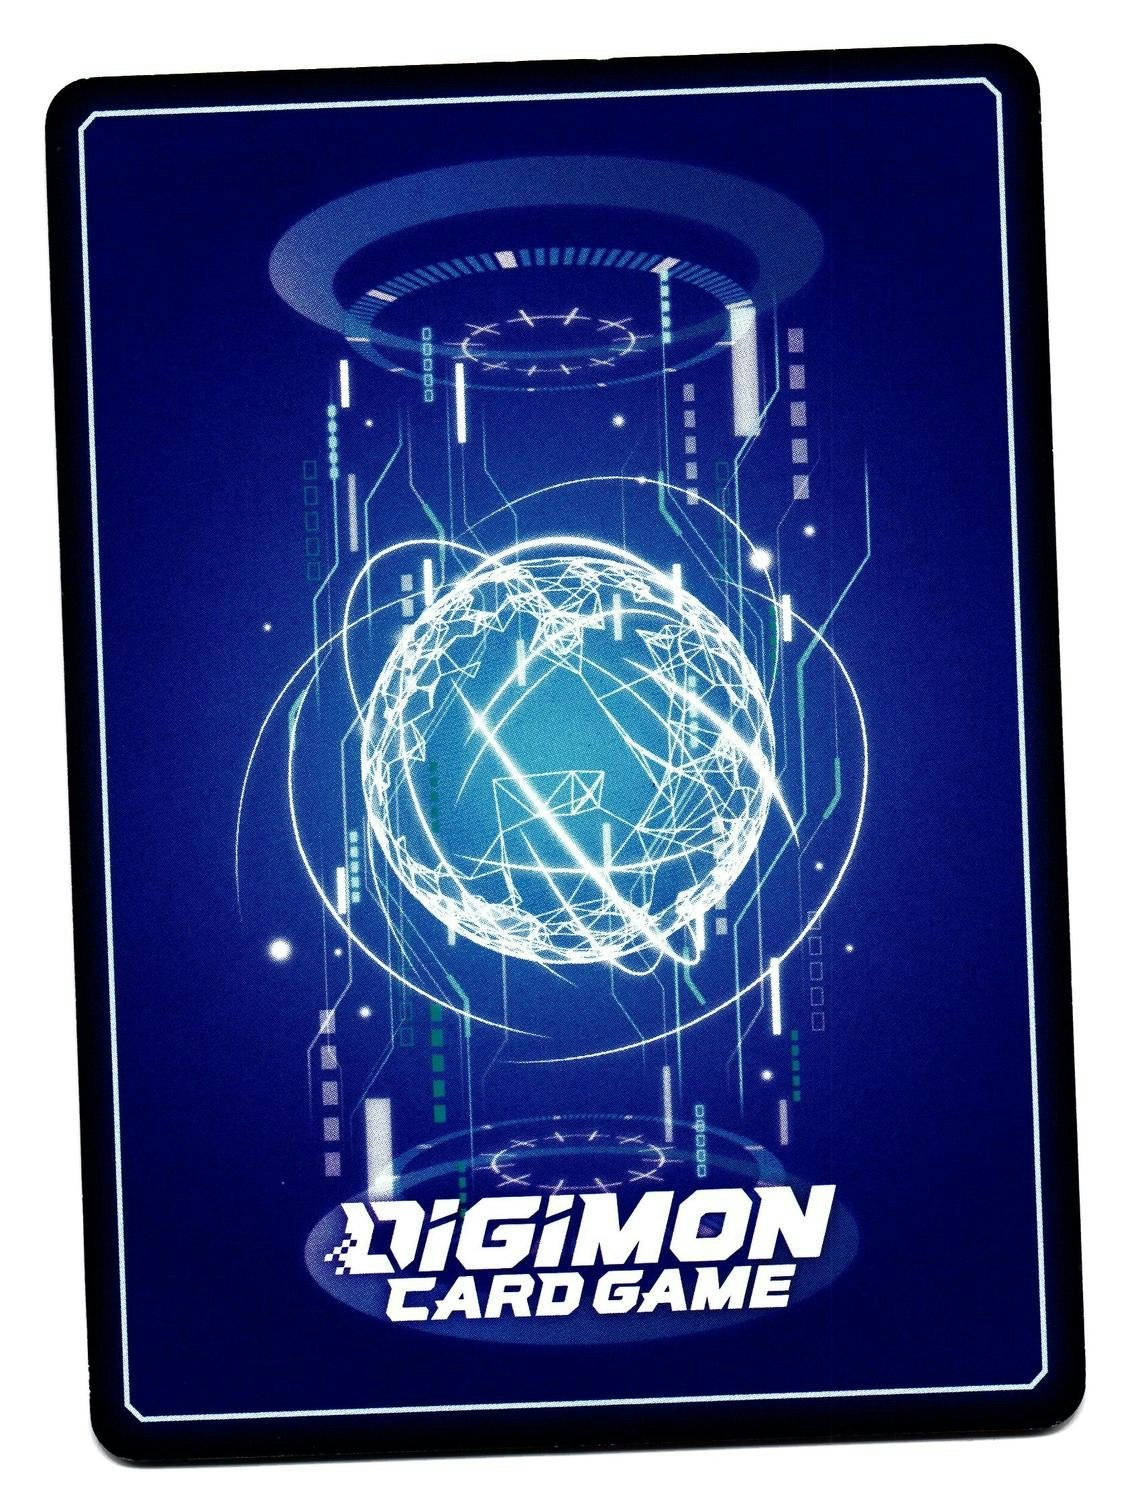 Cyclonemon Uncommon BT8-011 New Hero Digimon